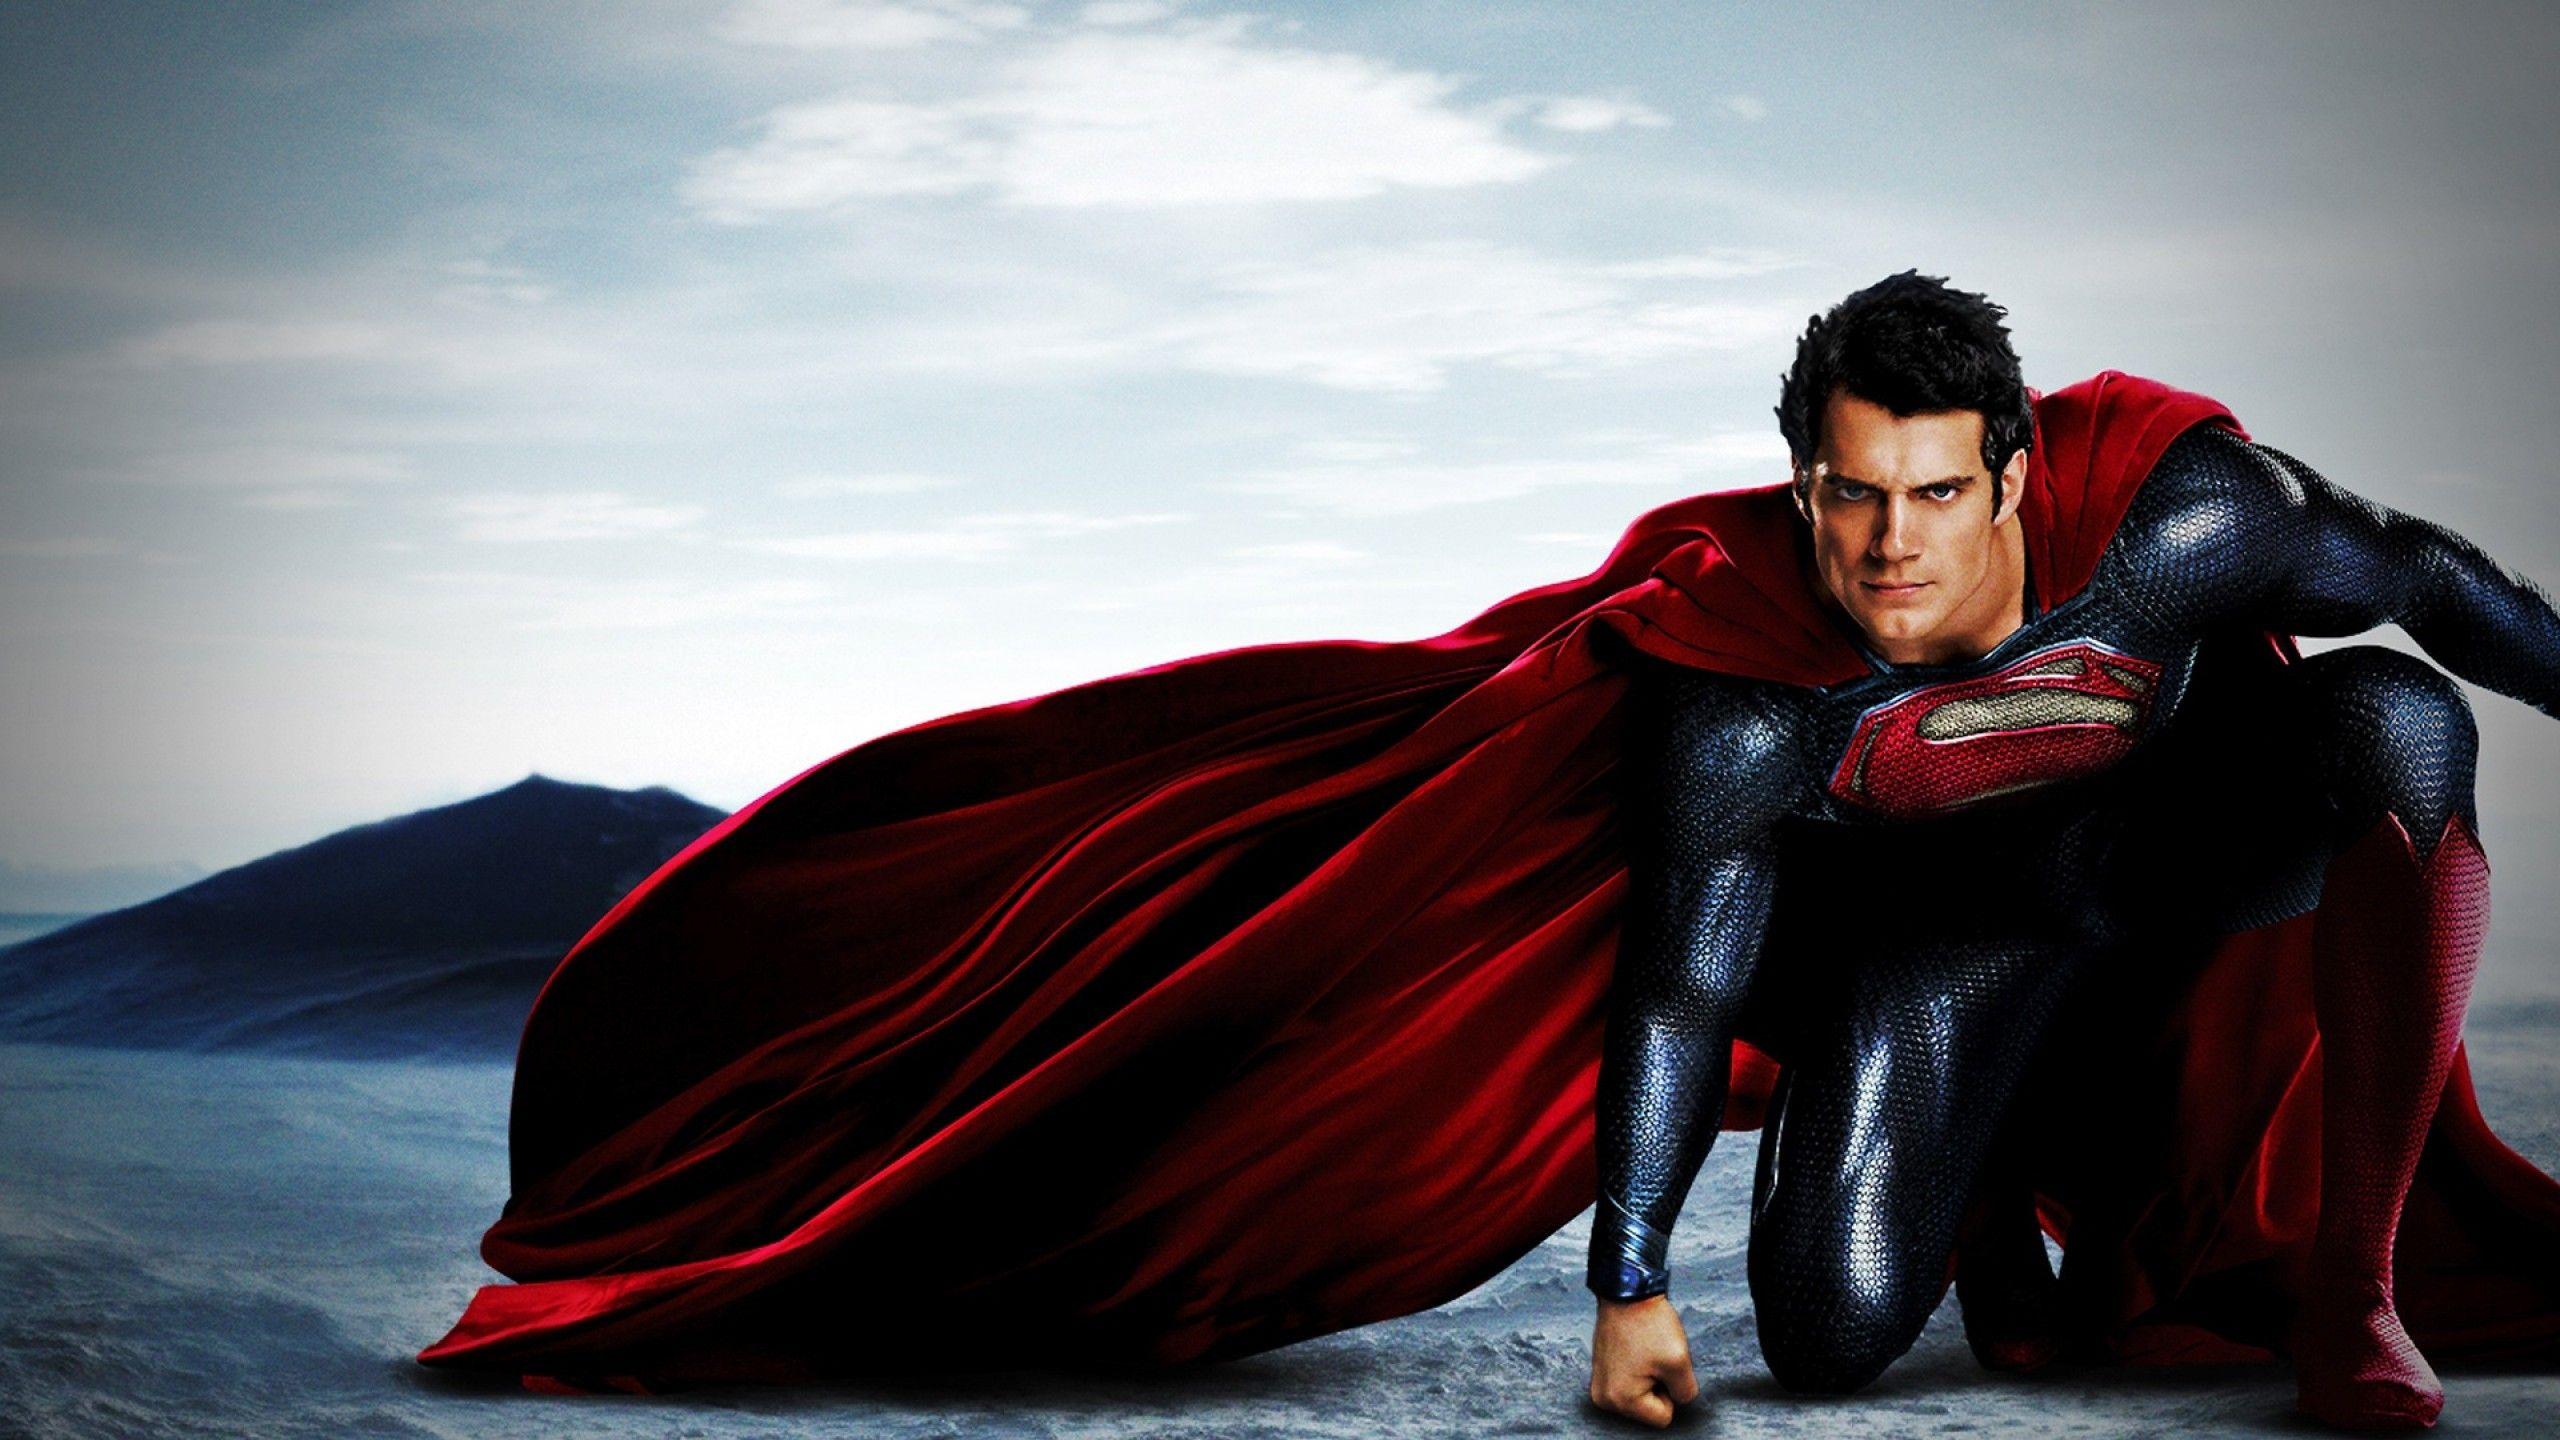 Superman 1080P, 2K, 4K, 5K HD wallpapers free download | Wallpaper Flare